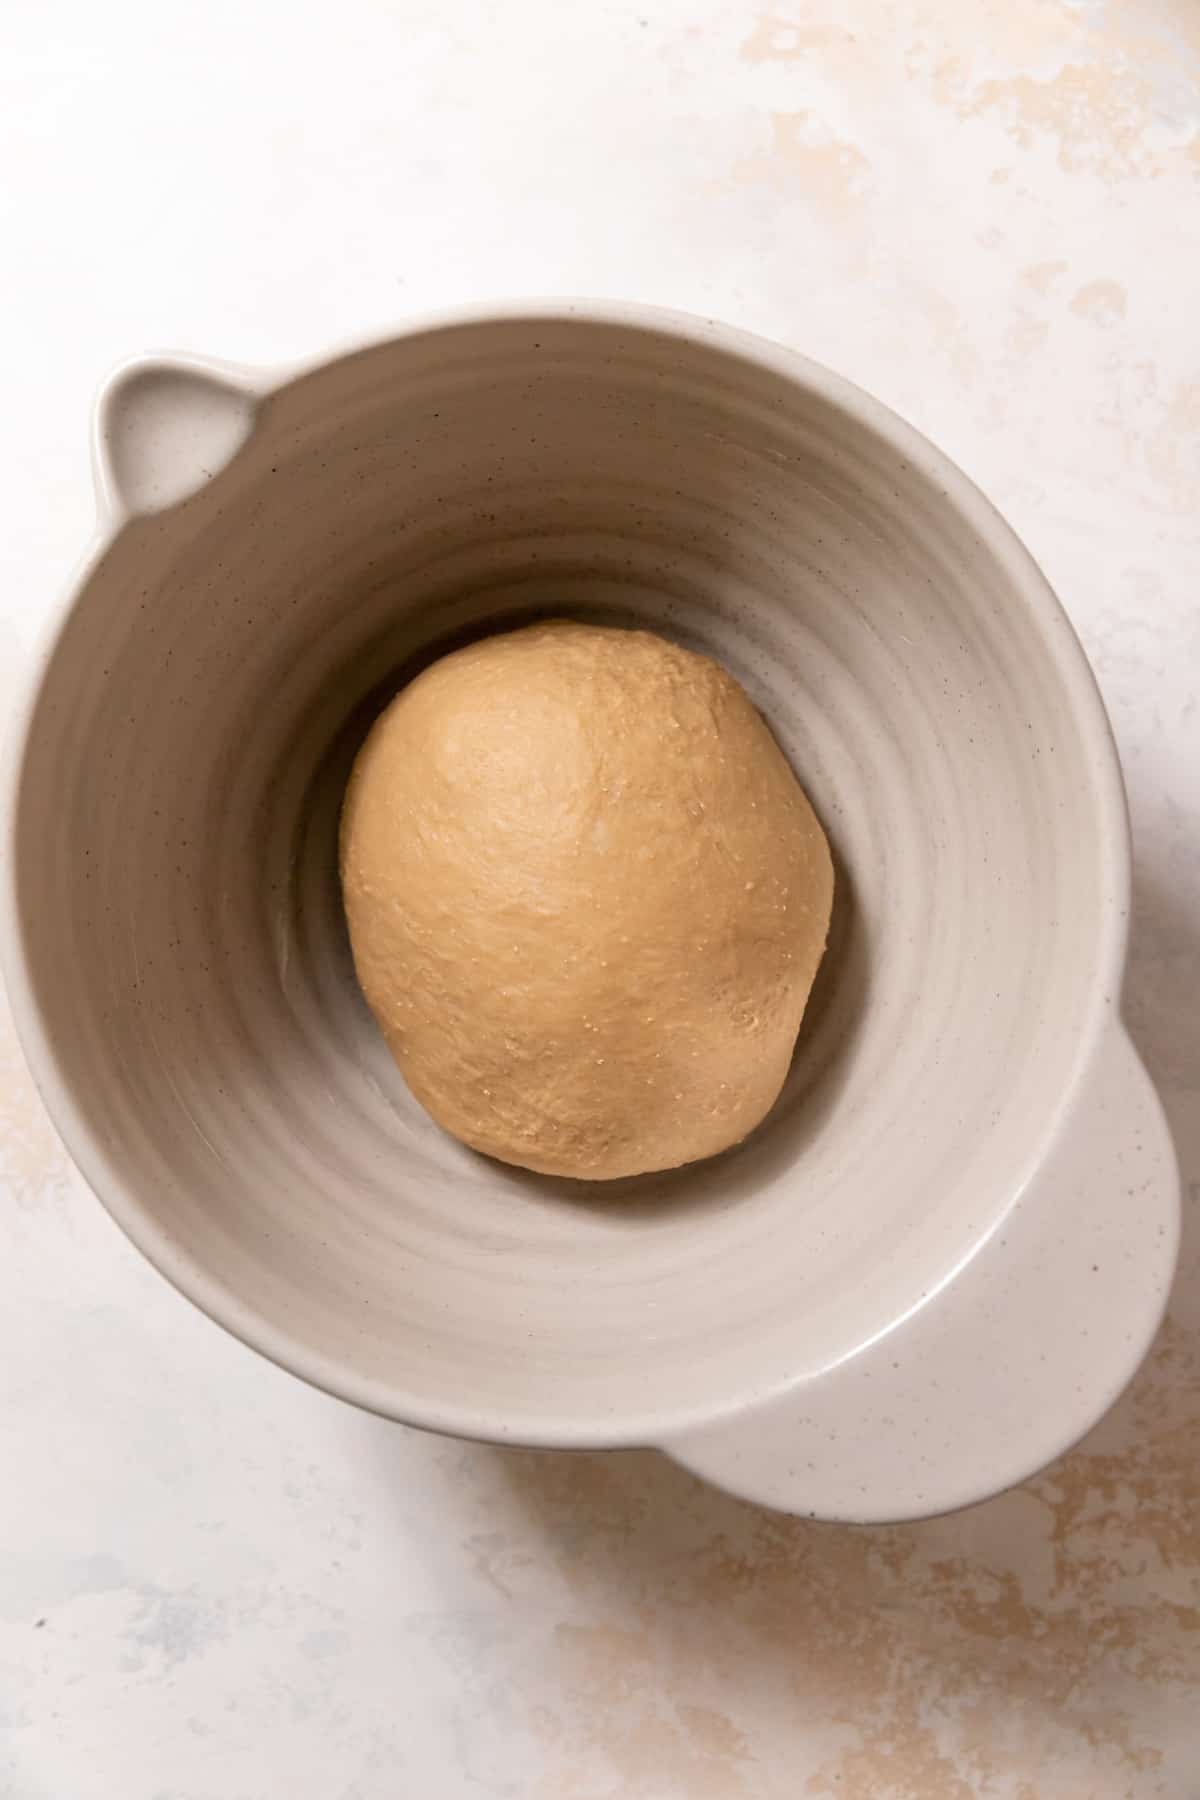 cinnamon roll dough in a bowl.